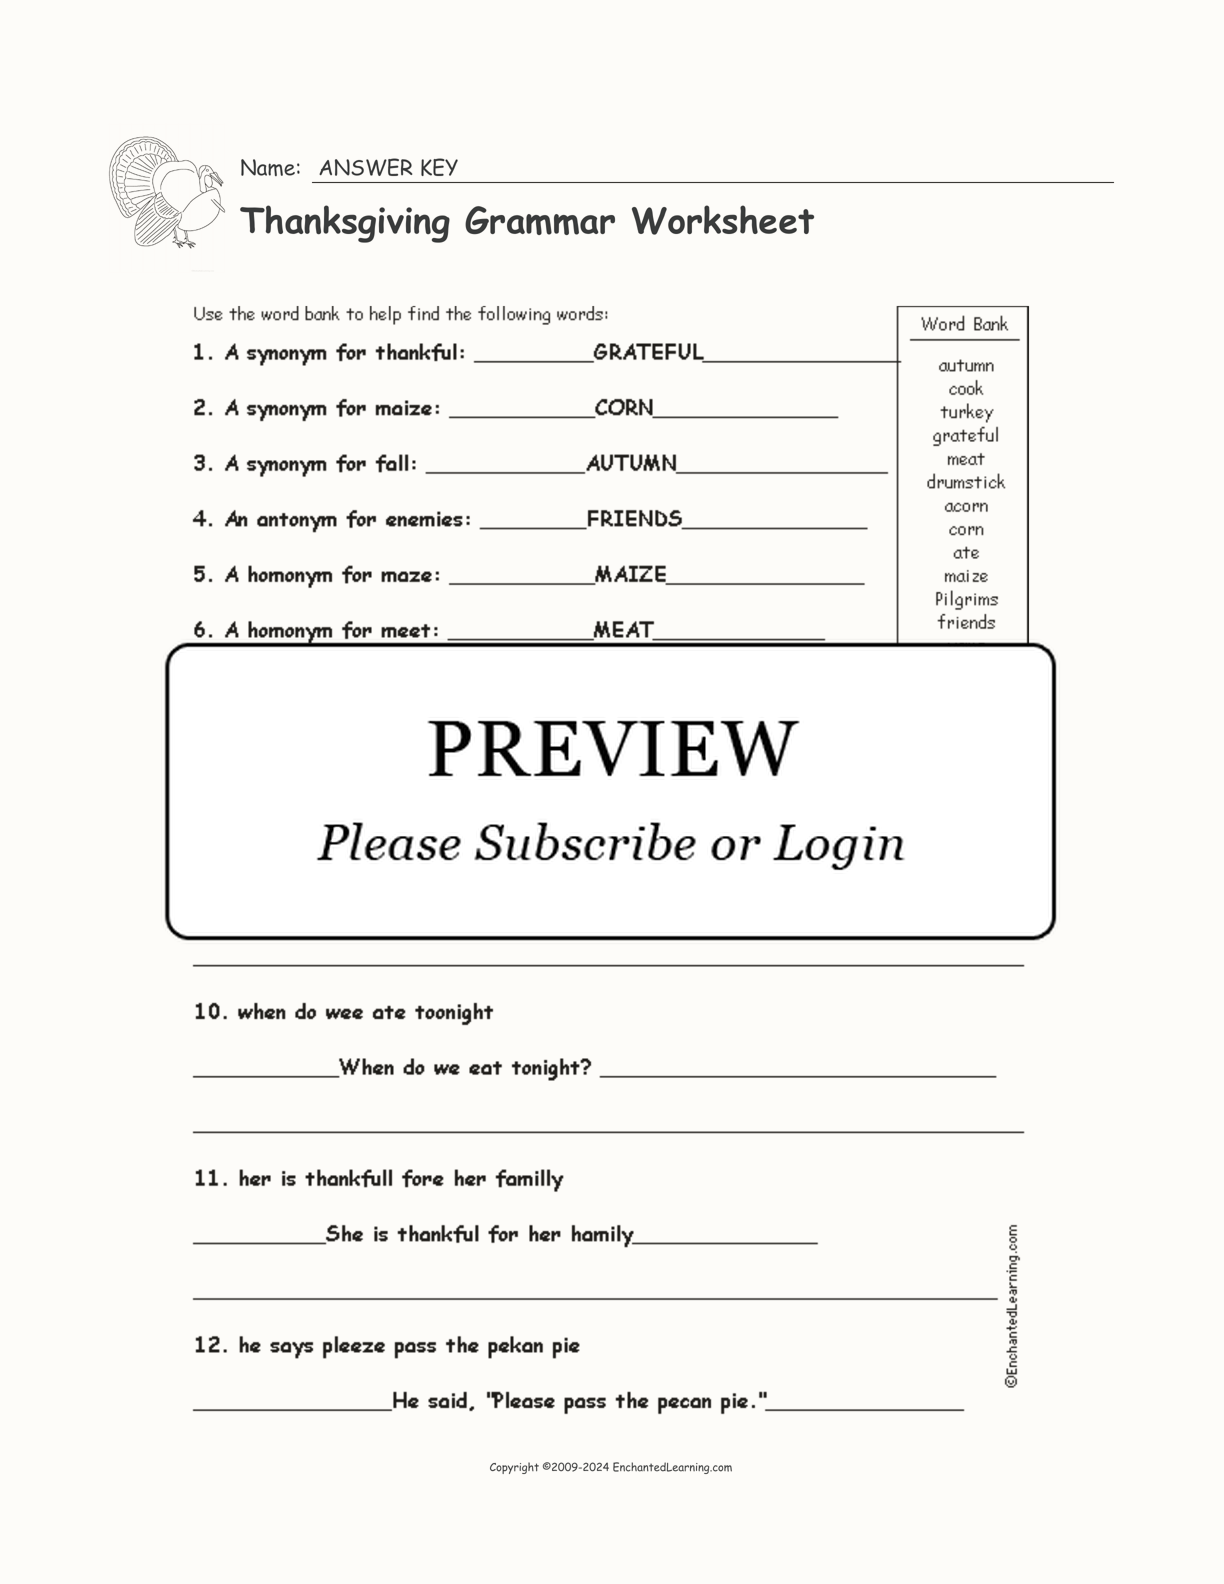 Thanksgiving Grammar Worksheet interactive worksheet page 2